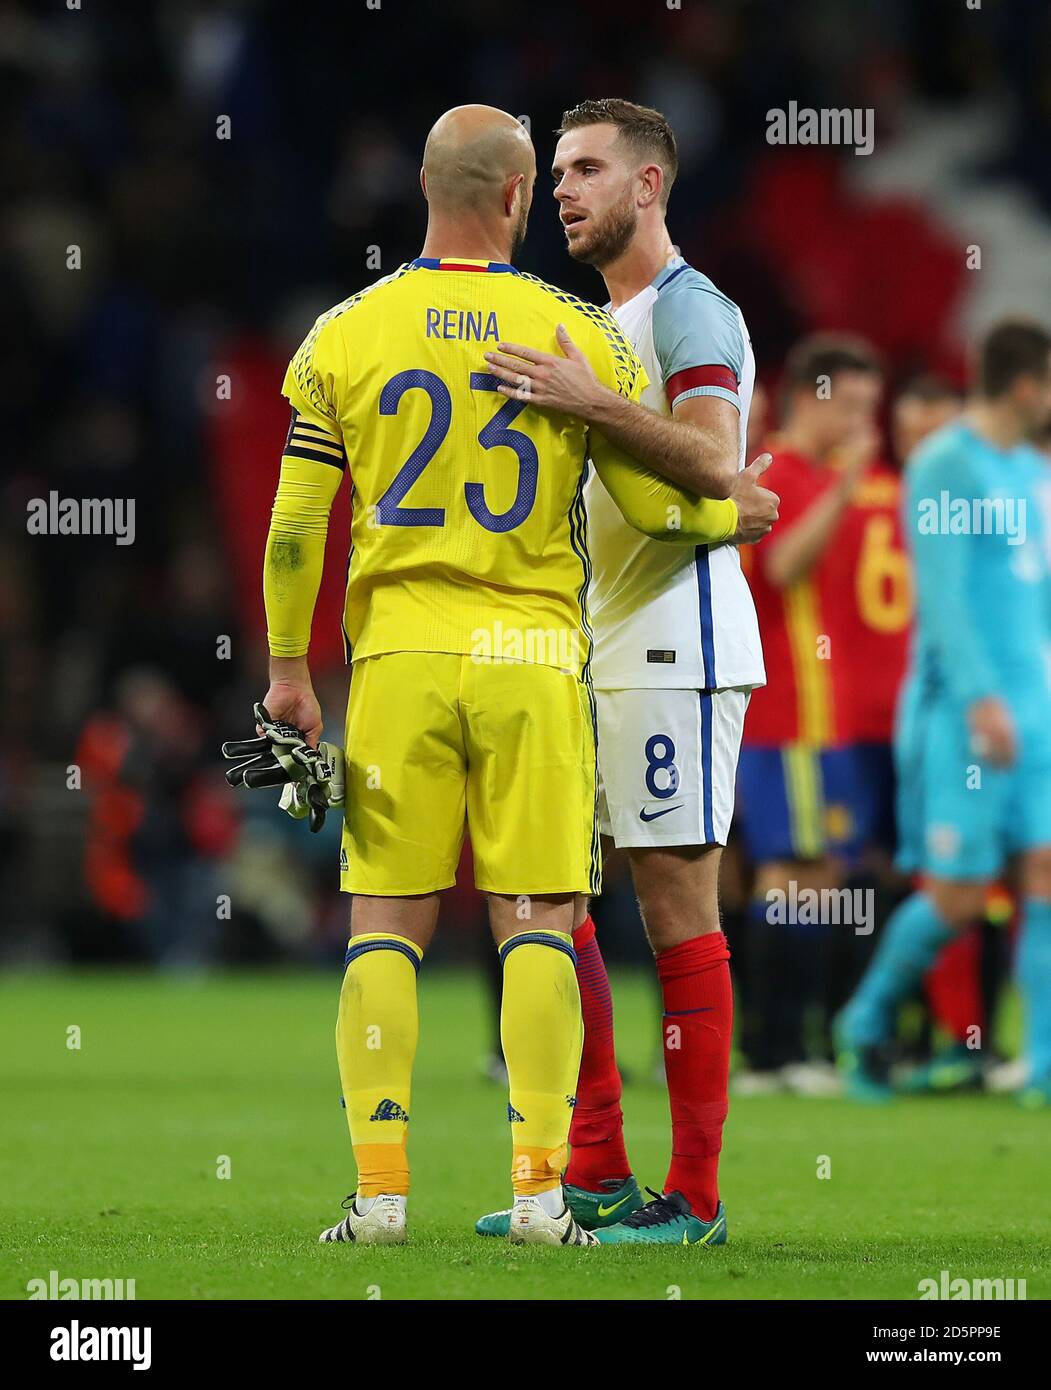 Spain goalkeeper Pepe Reina (left) hugs former club-mate England's Jordan Henderson after the game Stock Photo